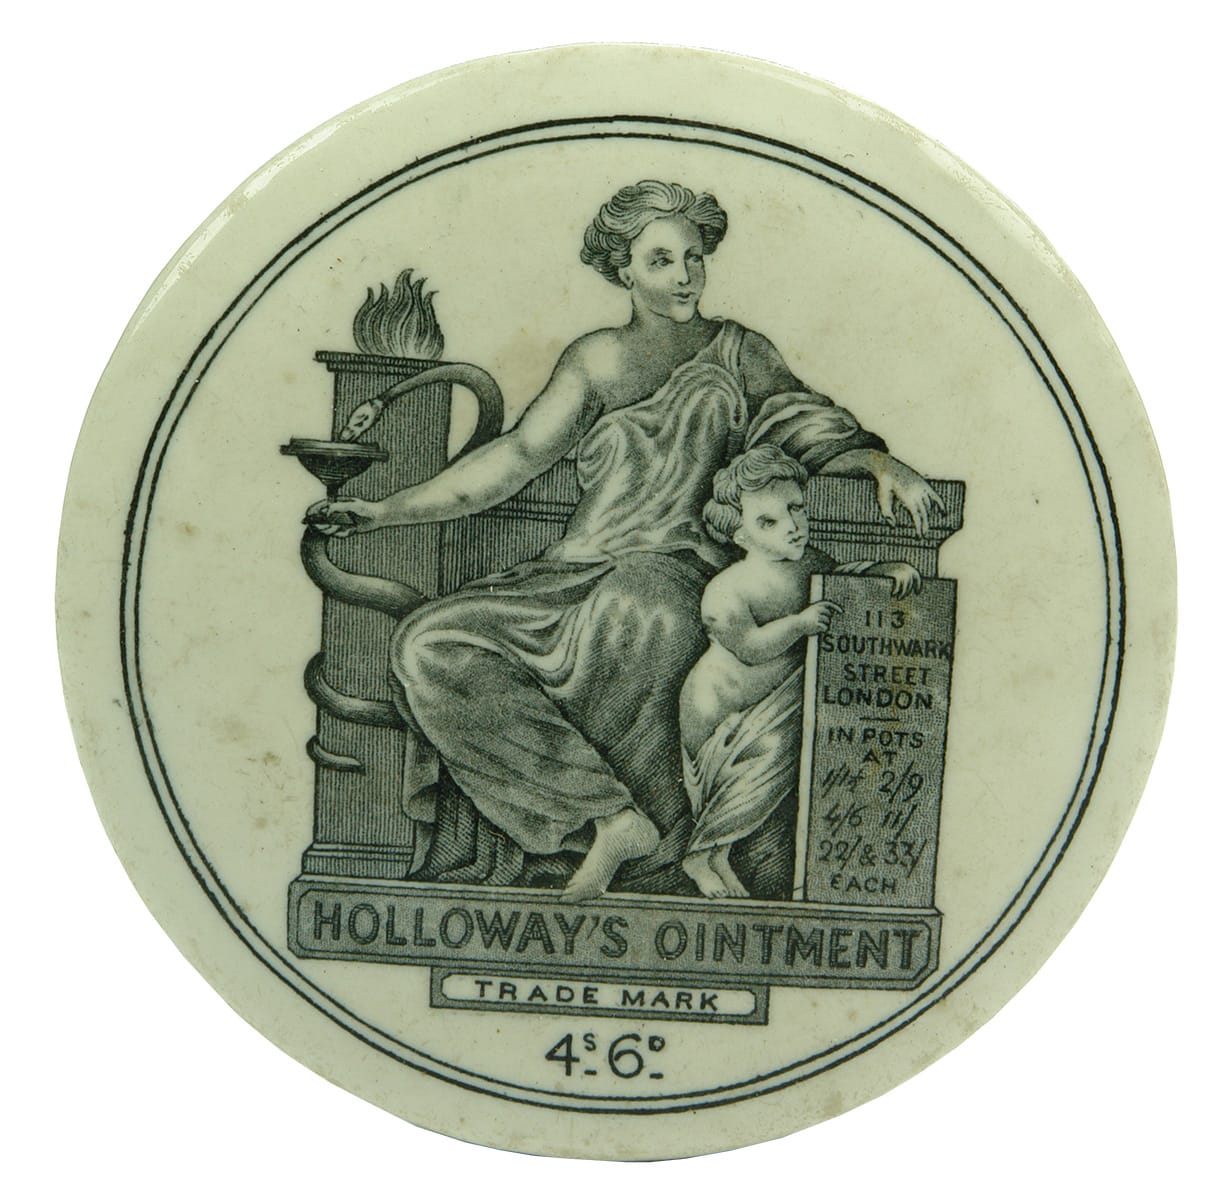 Holloways Ointment Southwark Street London Pot Lid